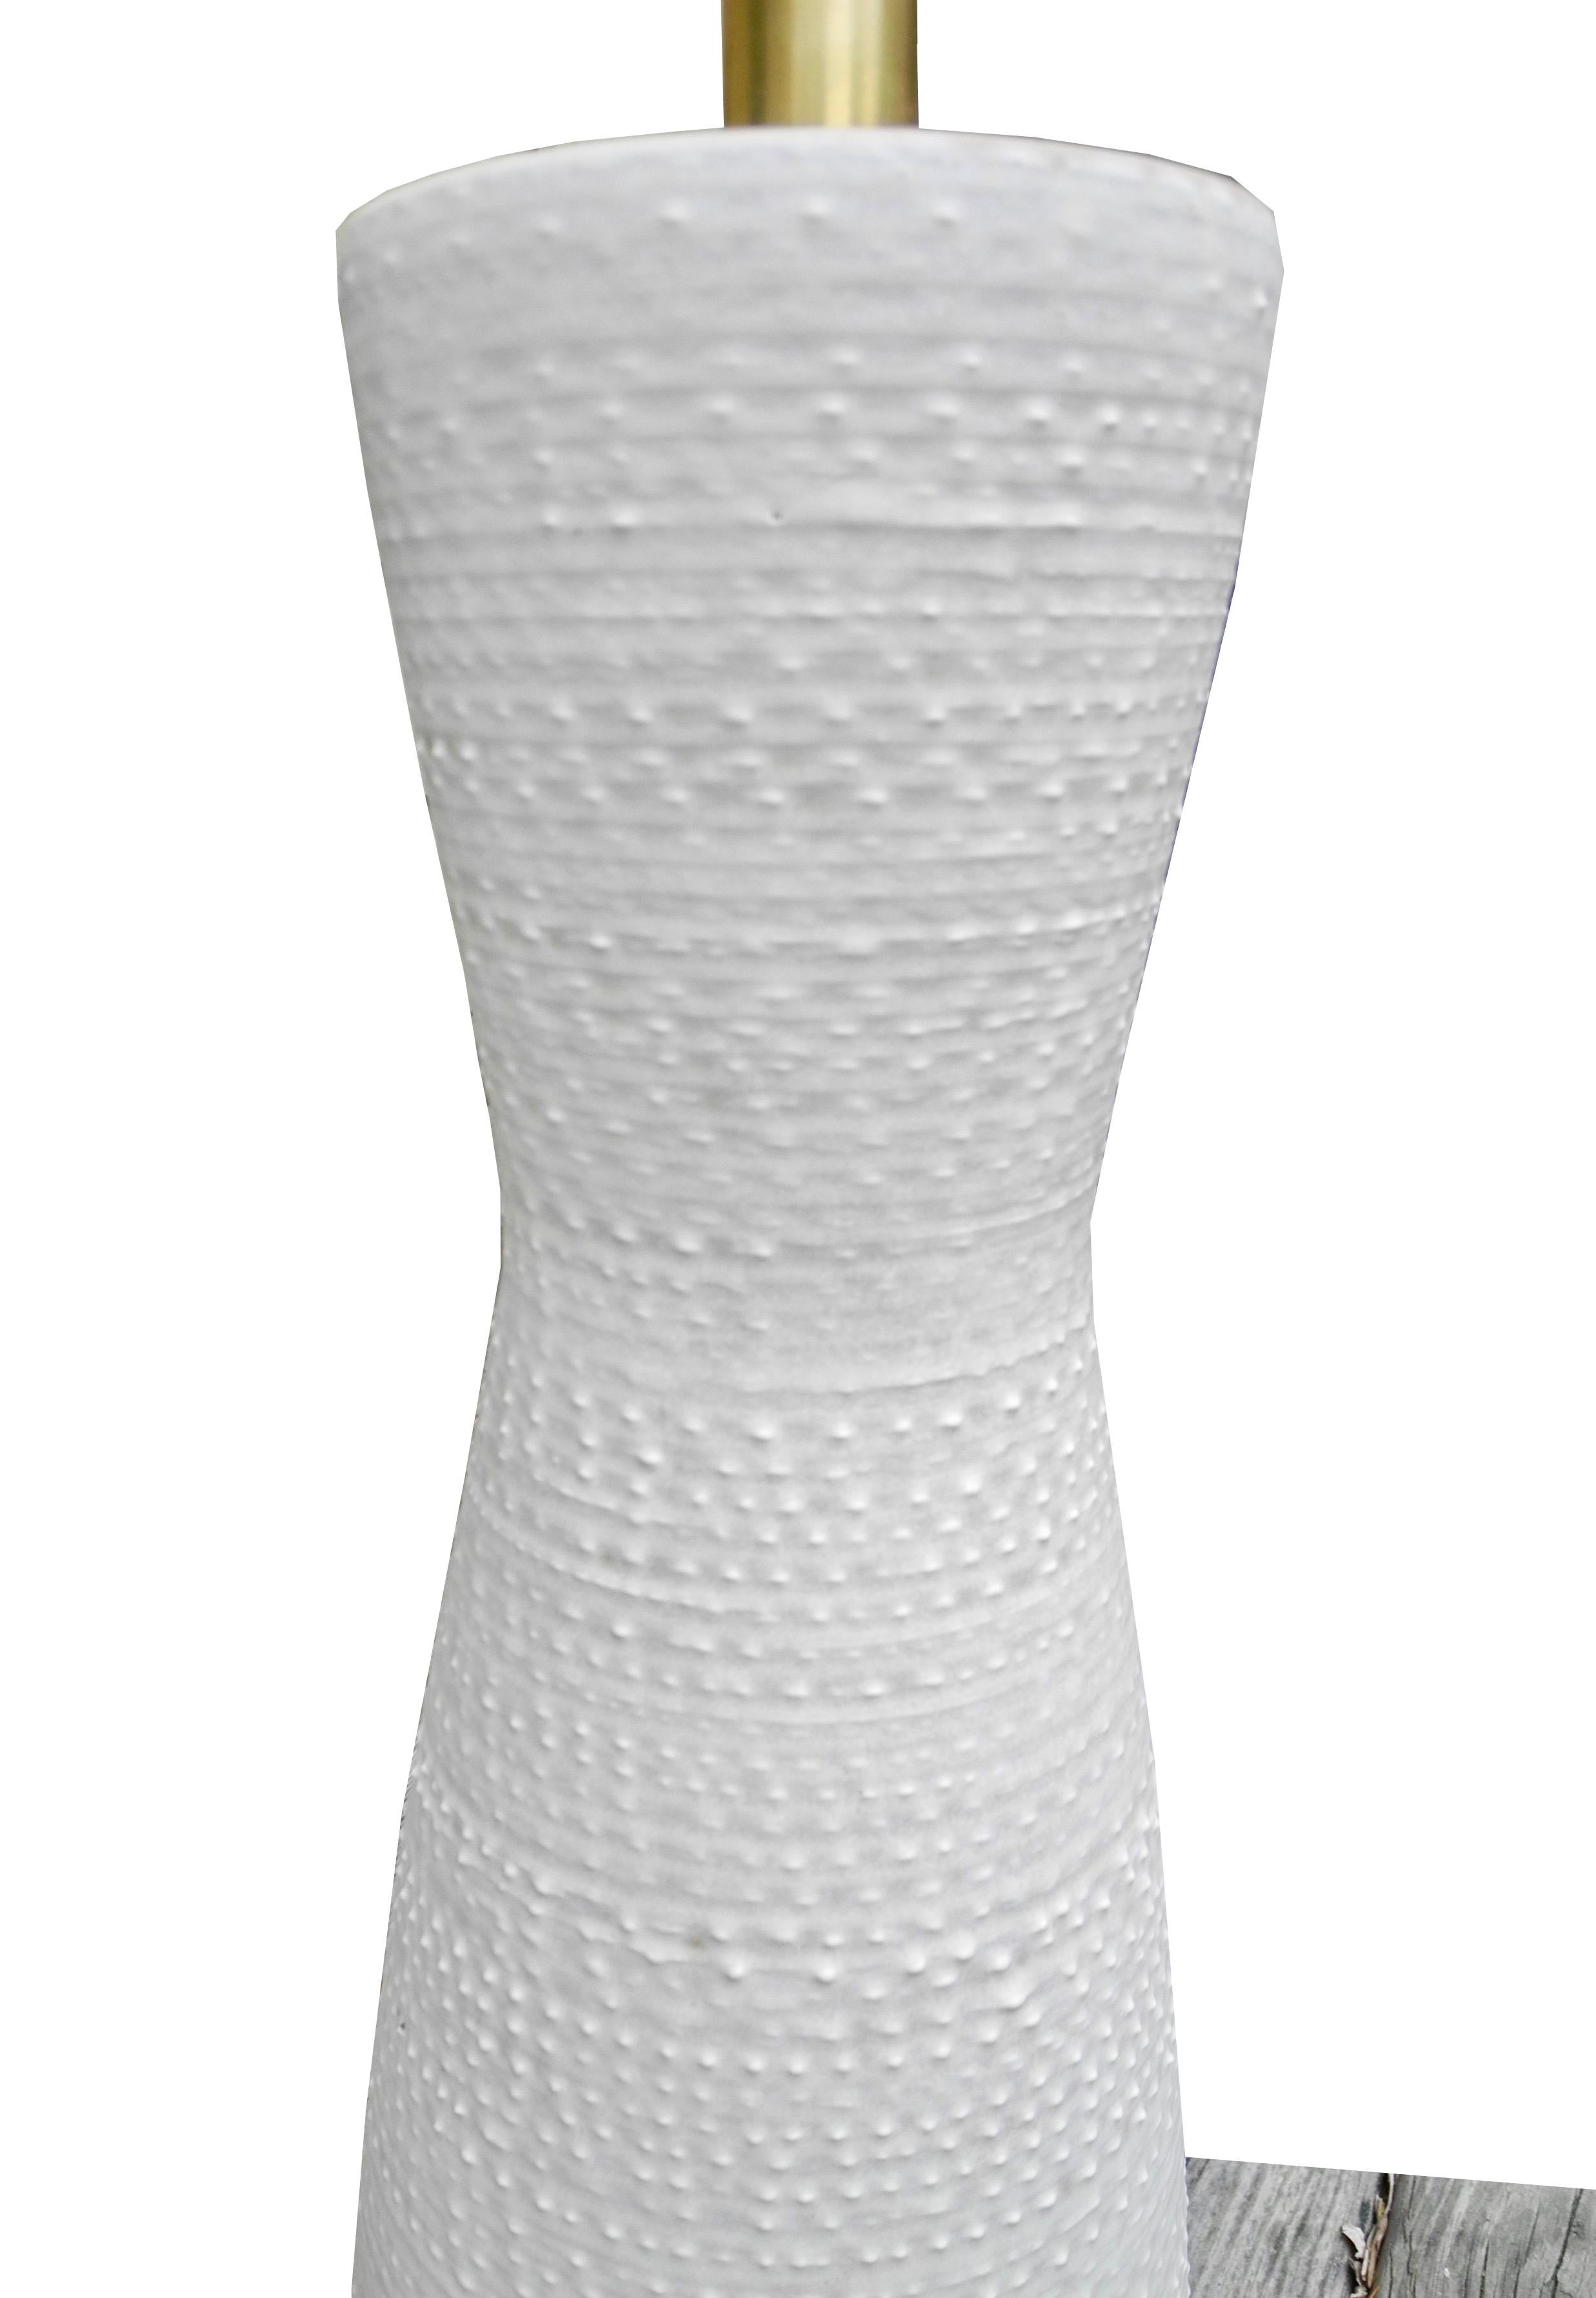 20th Century Mid-Century Modern White Ceramic Table Lamp by Design Technics, New York For Sale